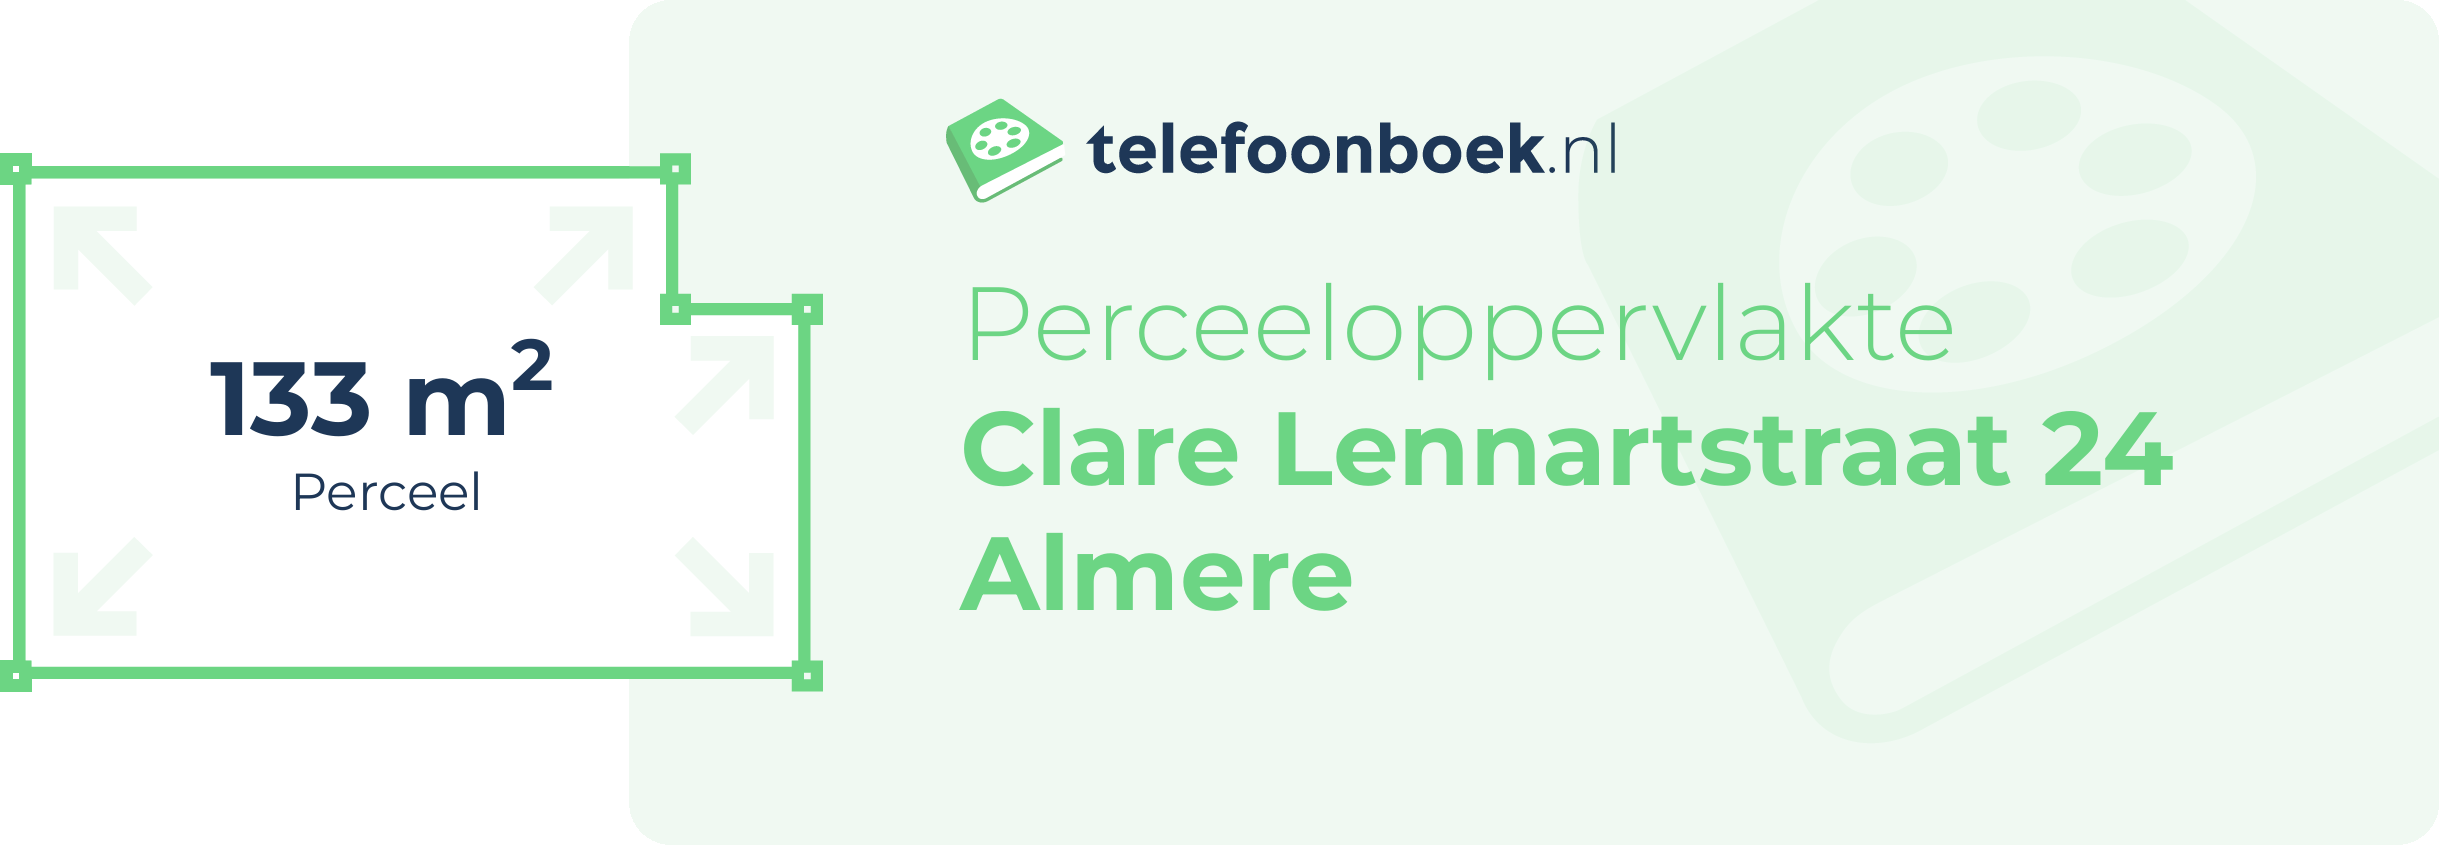 Perceeloppervlakte Clare Lennartstraat 24 Almere